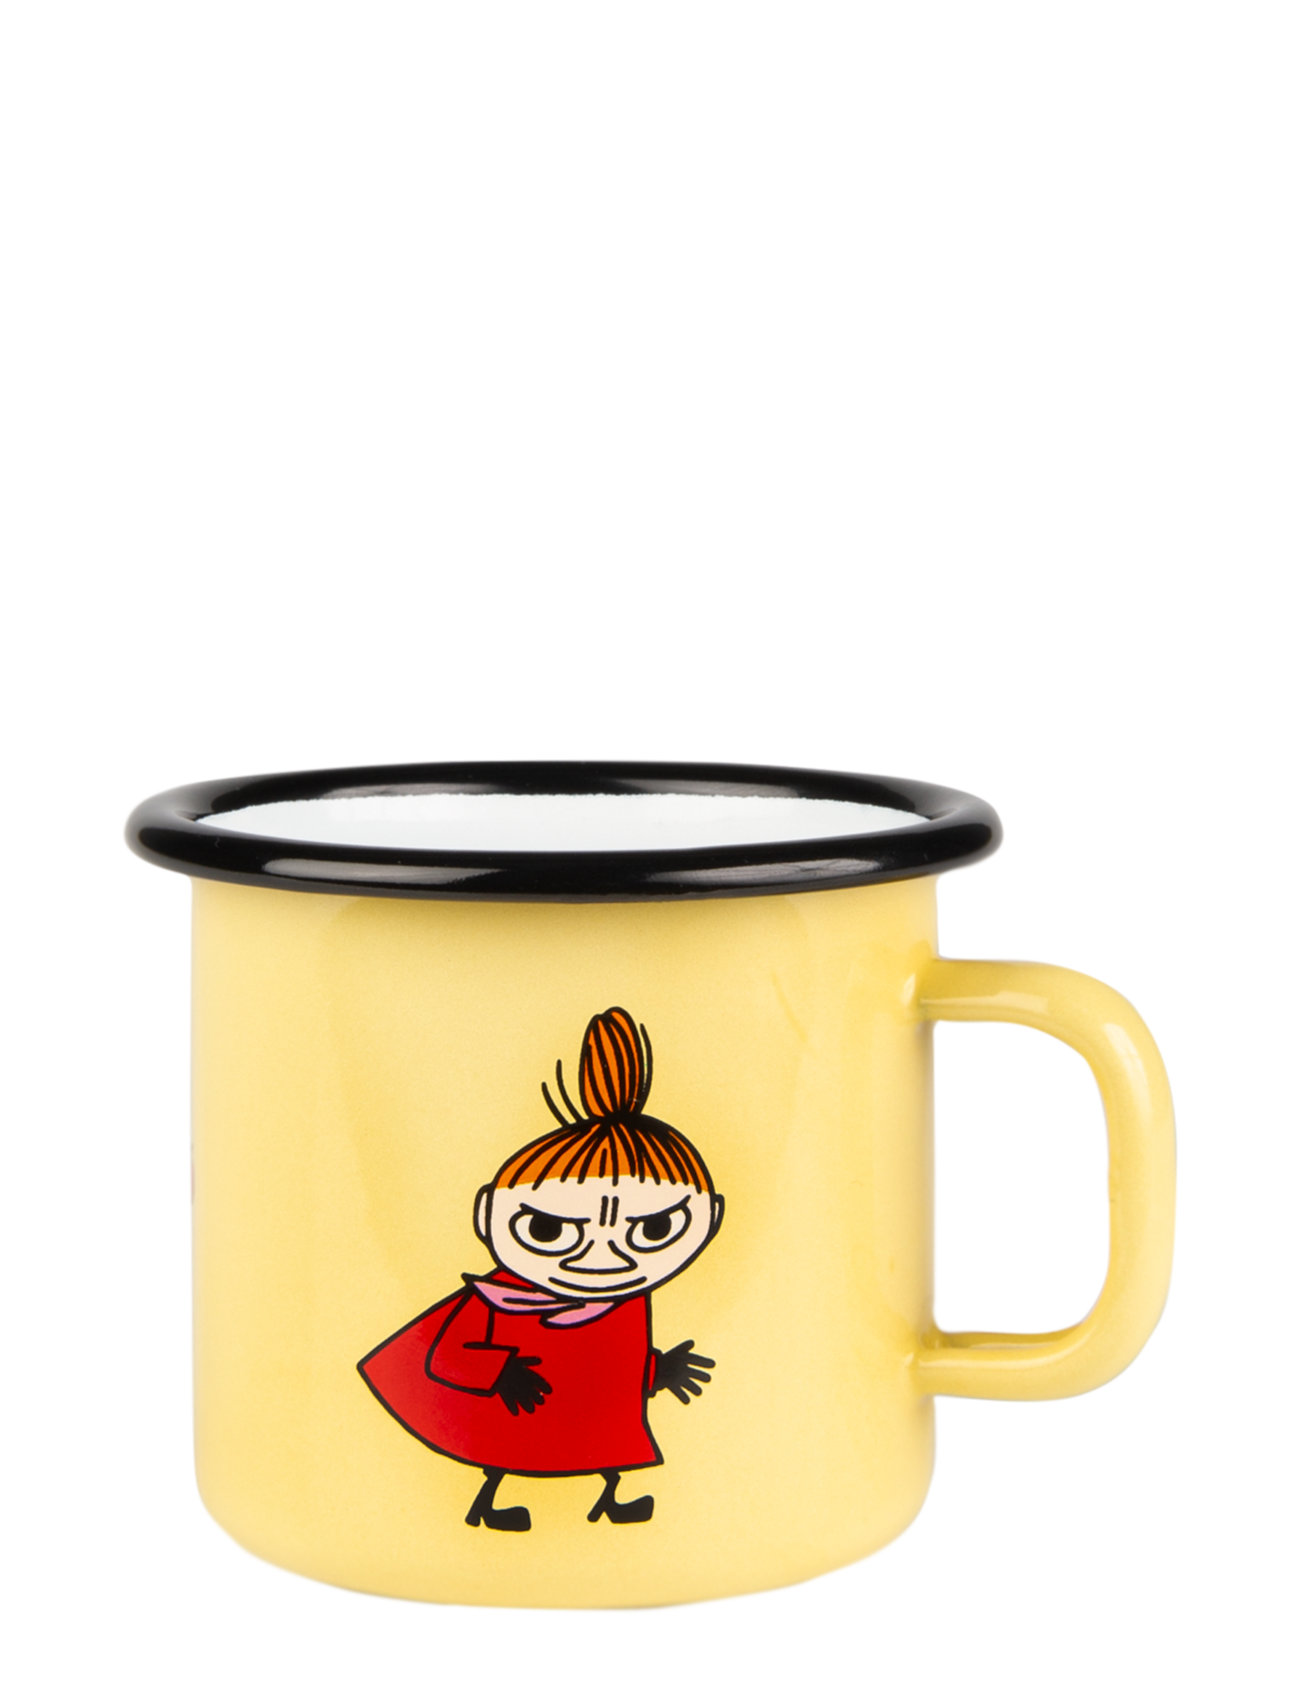 Moomin Enamel Mug 25Cl Little My Home Tableware Cups & Mugs Coffee Cups Yellow Moomin